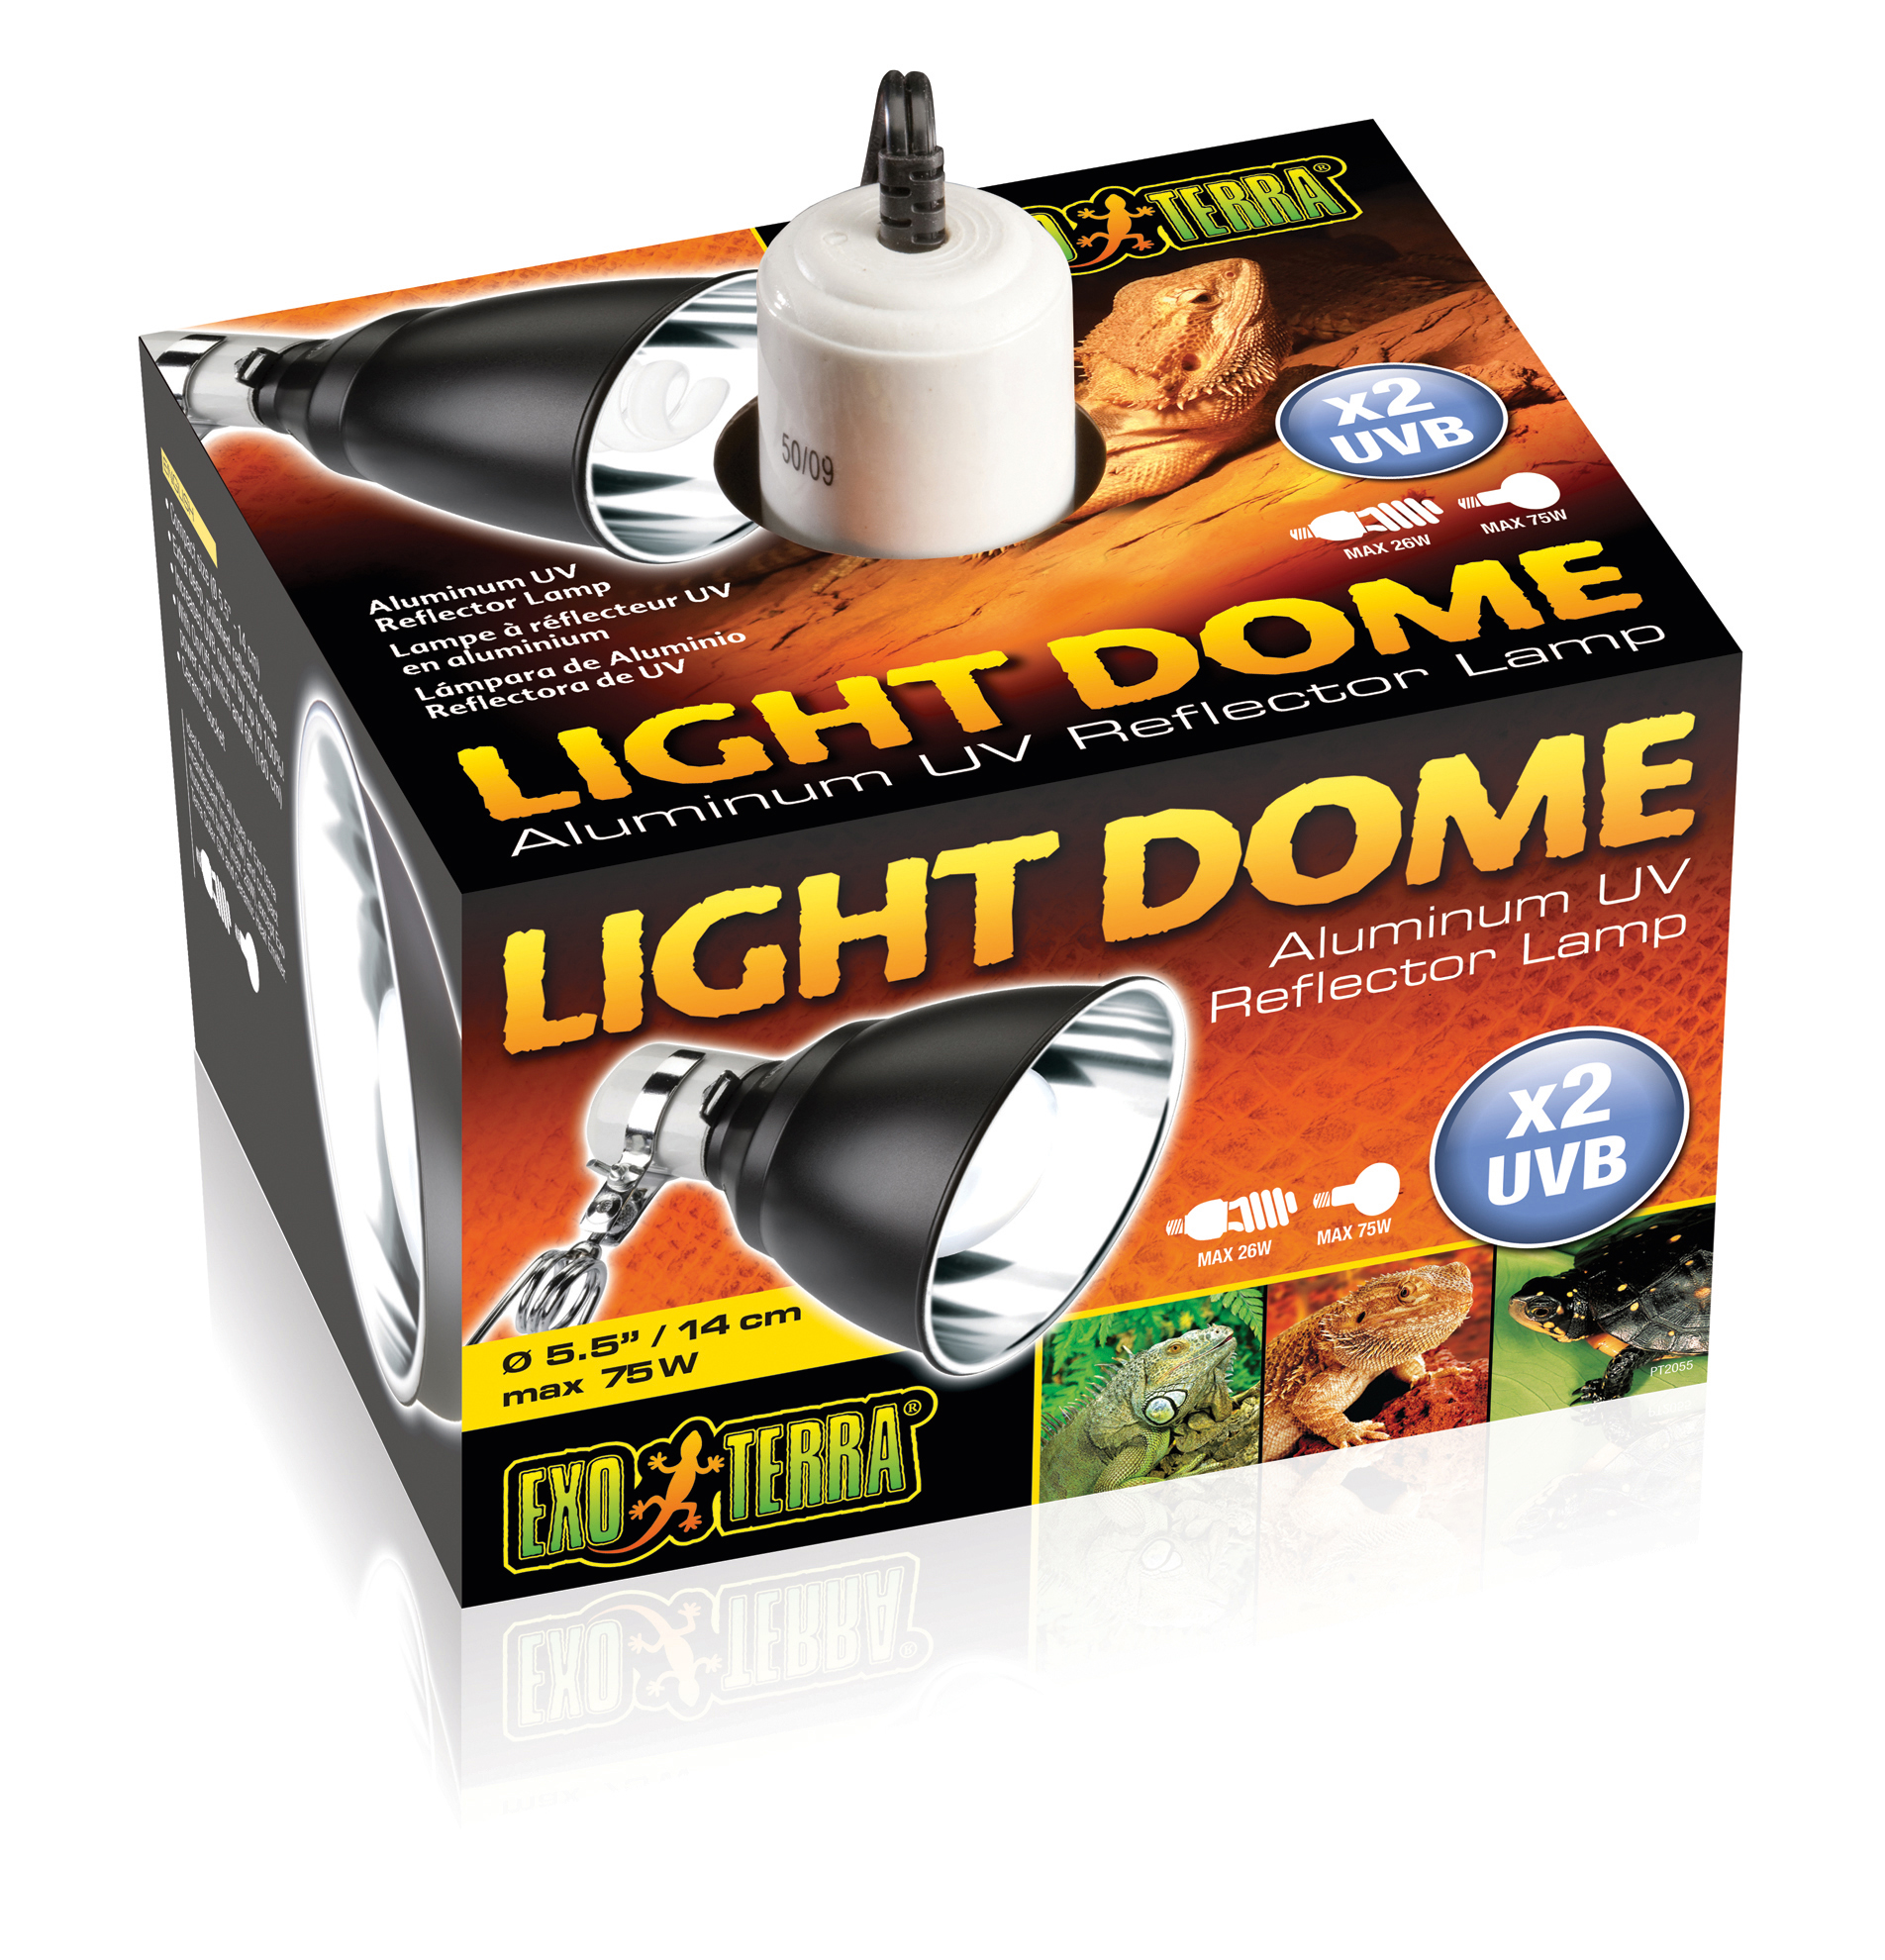 Ex light dome lighting fixture - <Product shot>